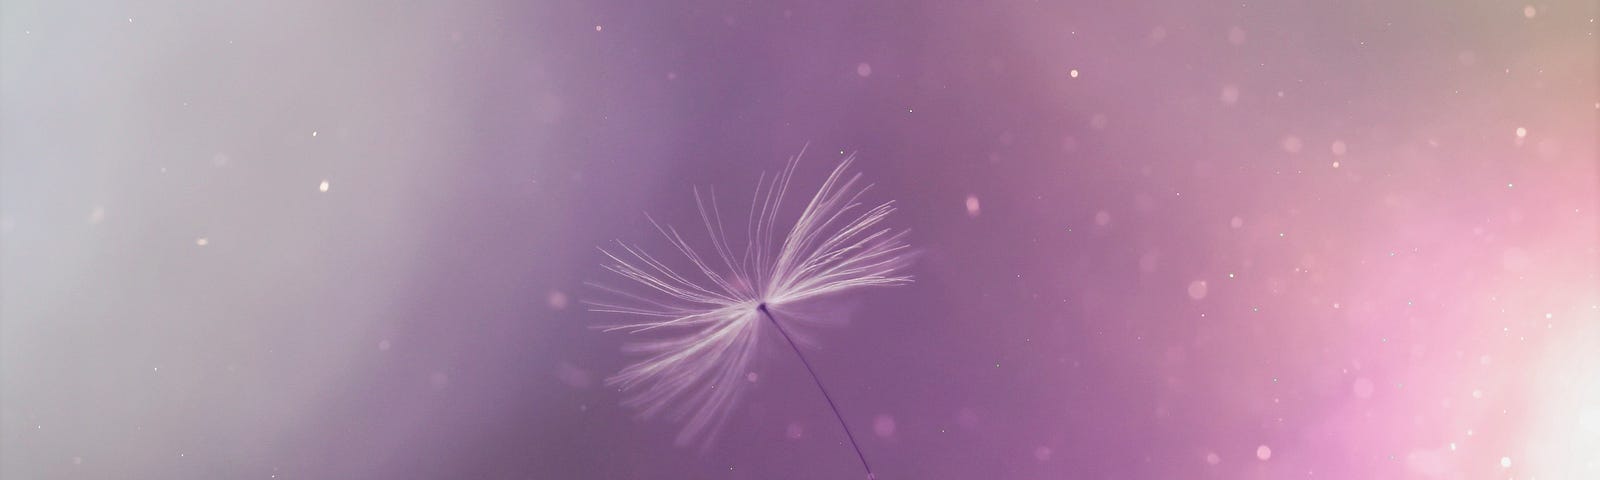 Dandelion seed in the wind